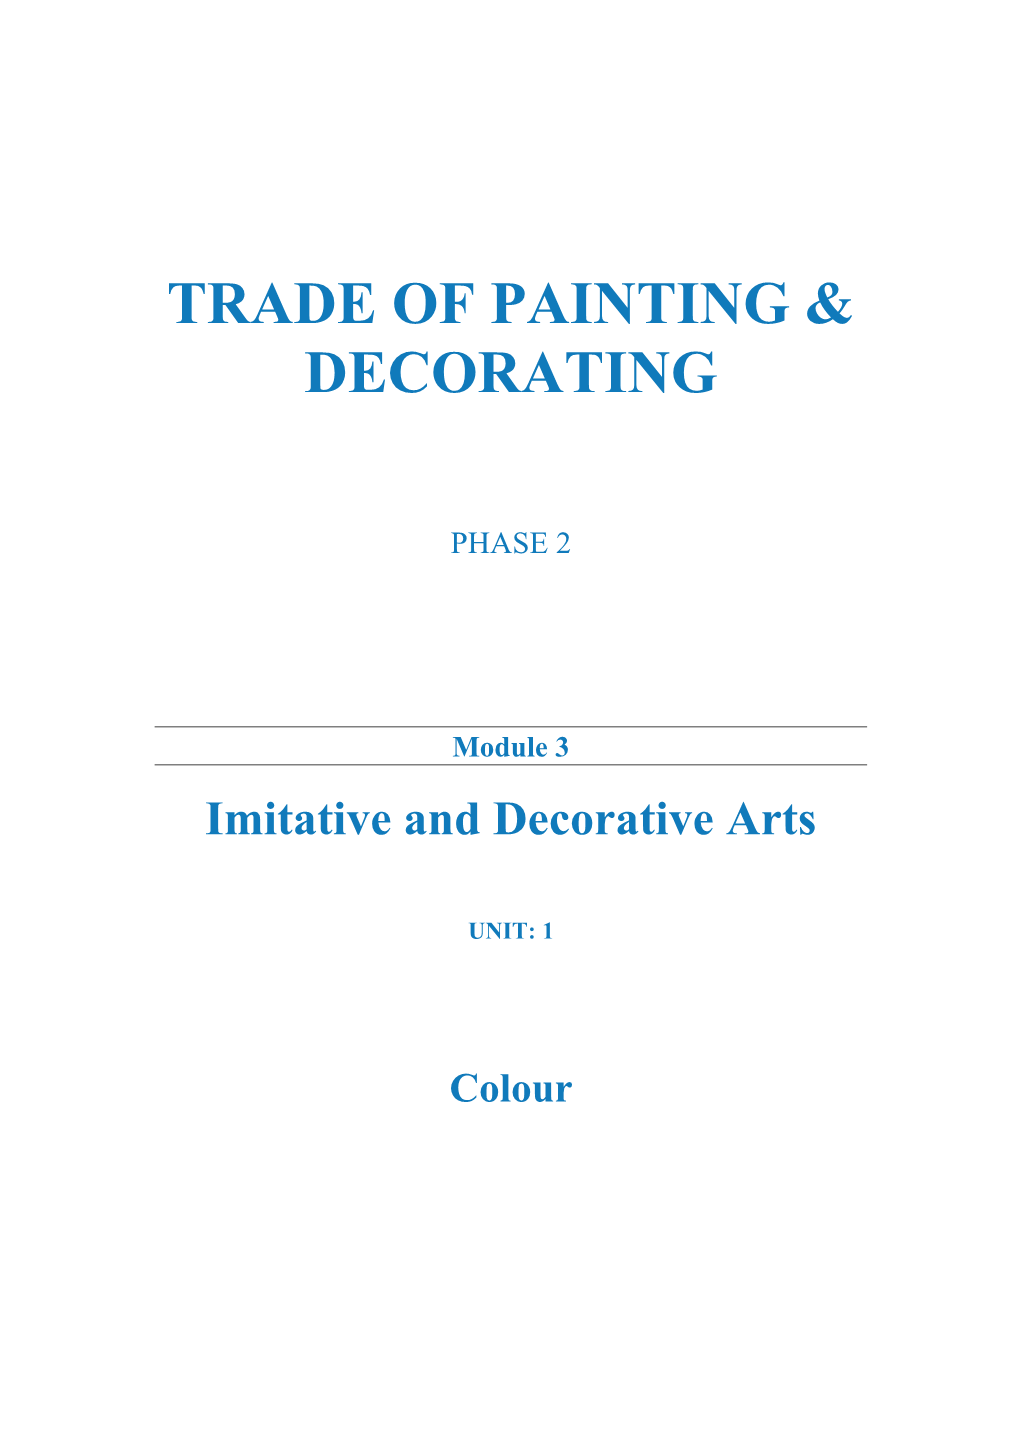 Imitative and Decorative Arts